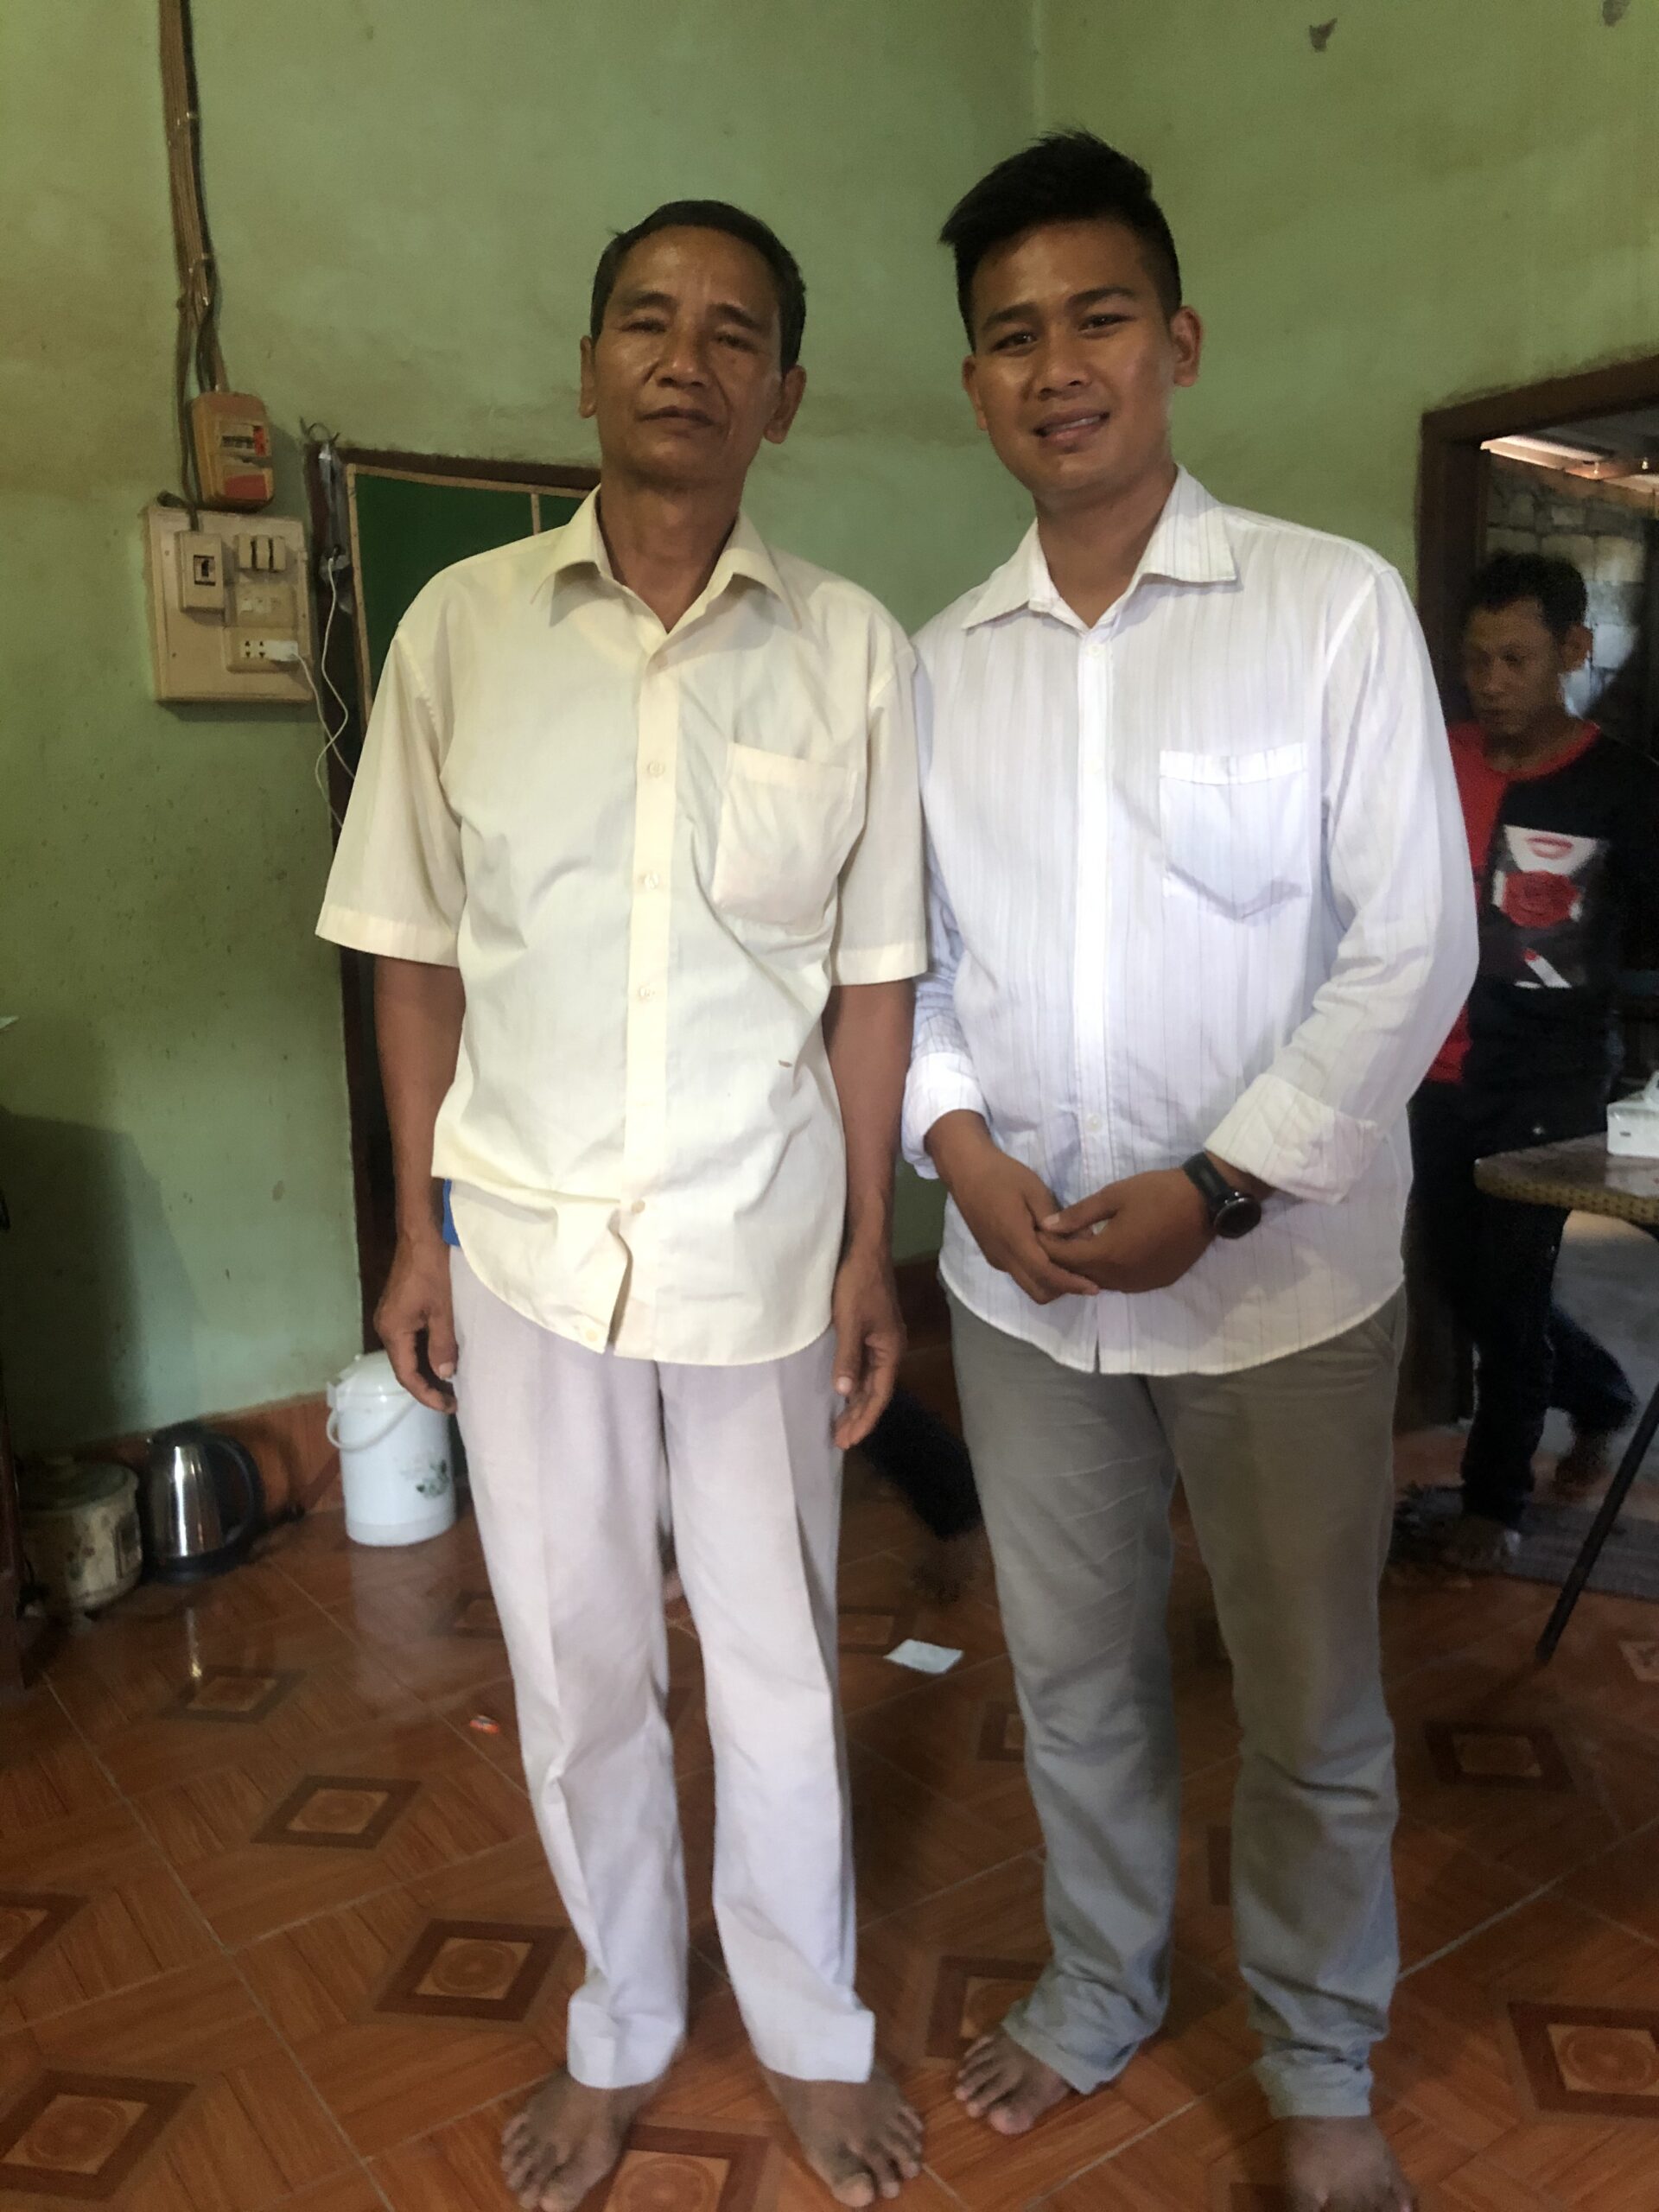 LAOS | NOV. 27, 2020 — Pray for Village Elder Ostracized by Family for Faith